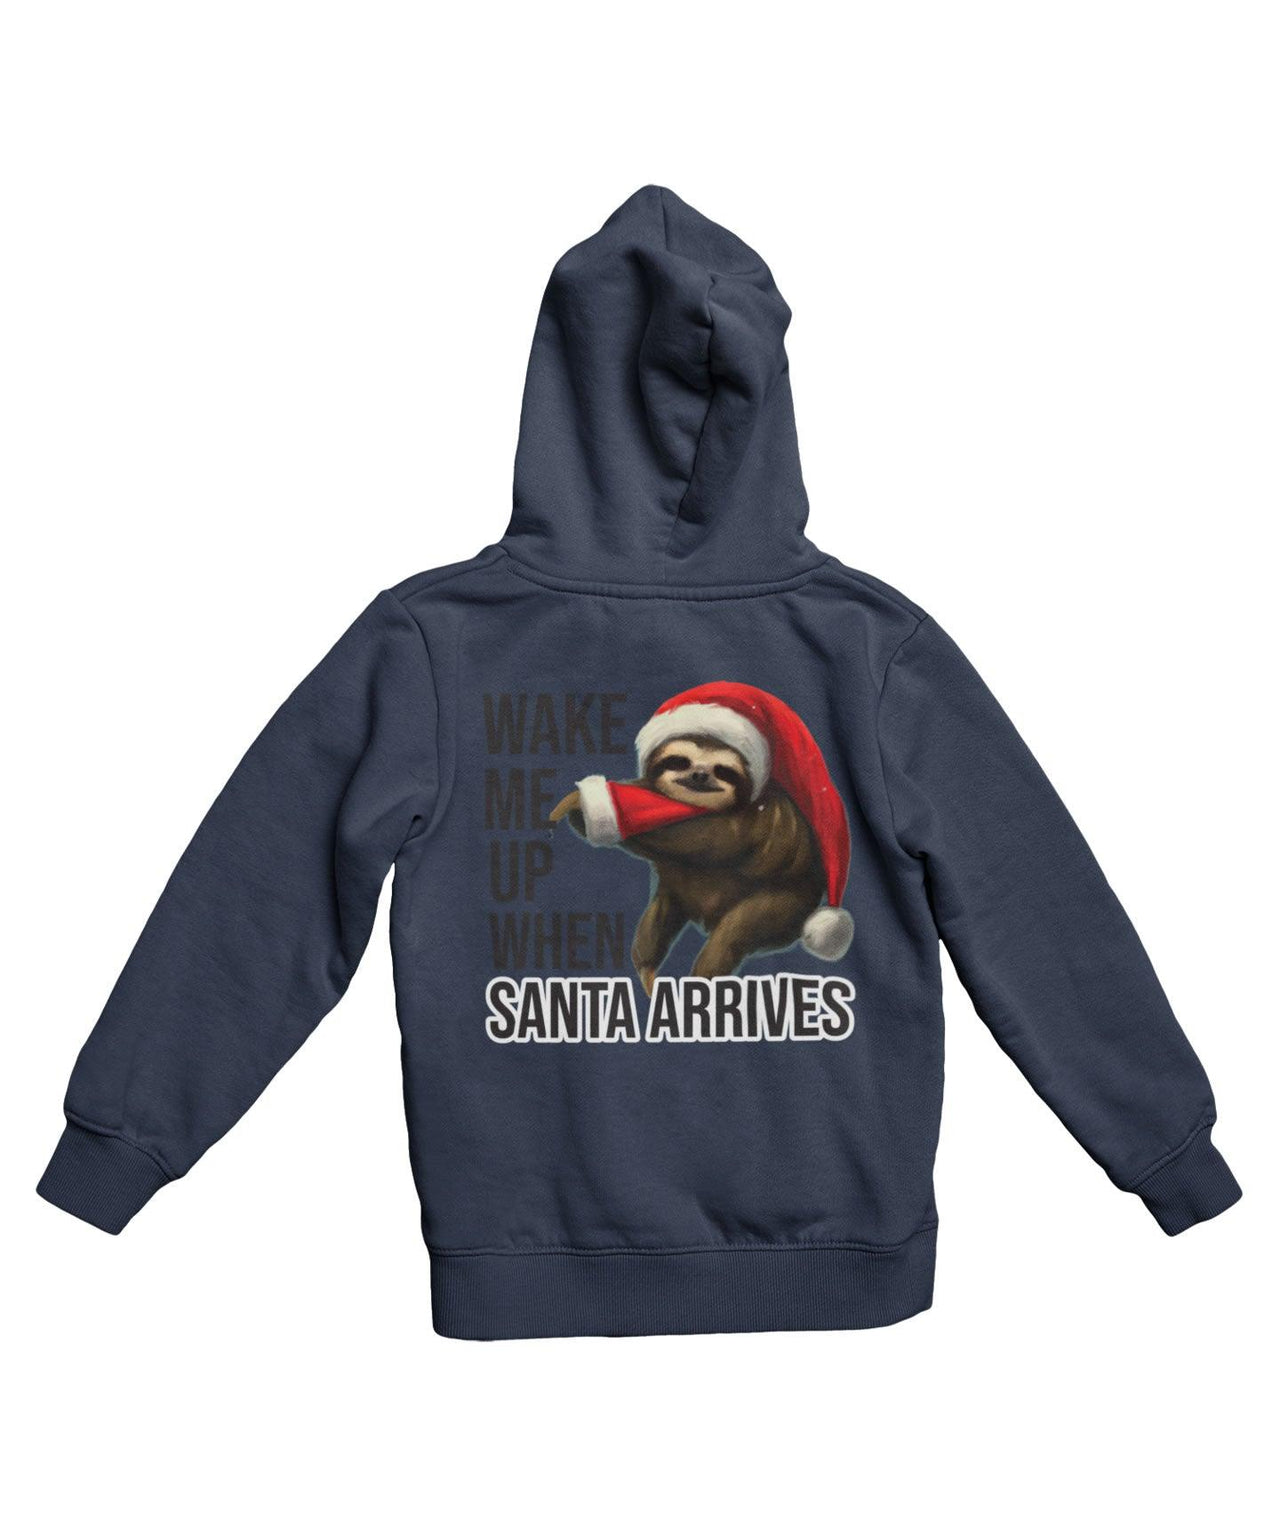 Sloth Wake Me Up When Santa Arrives Christmas Back Printed Graphic Hoodie 8Ball